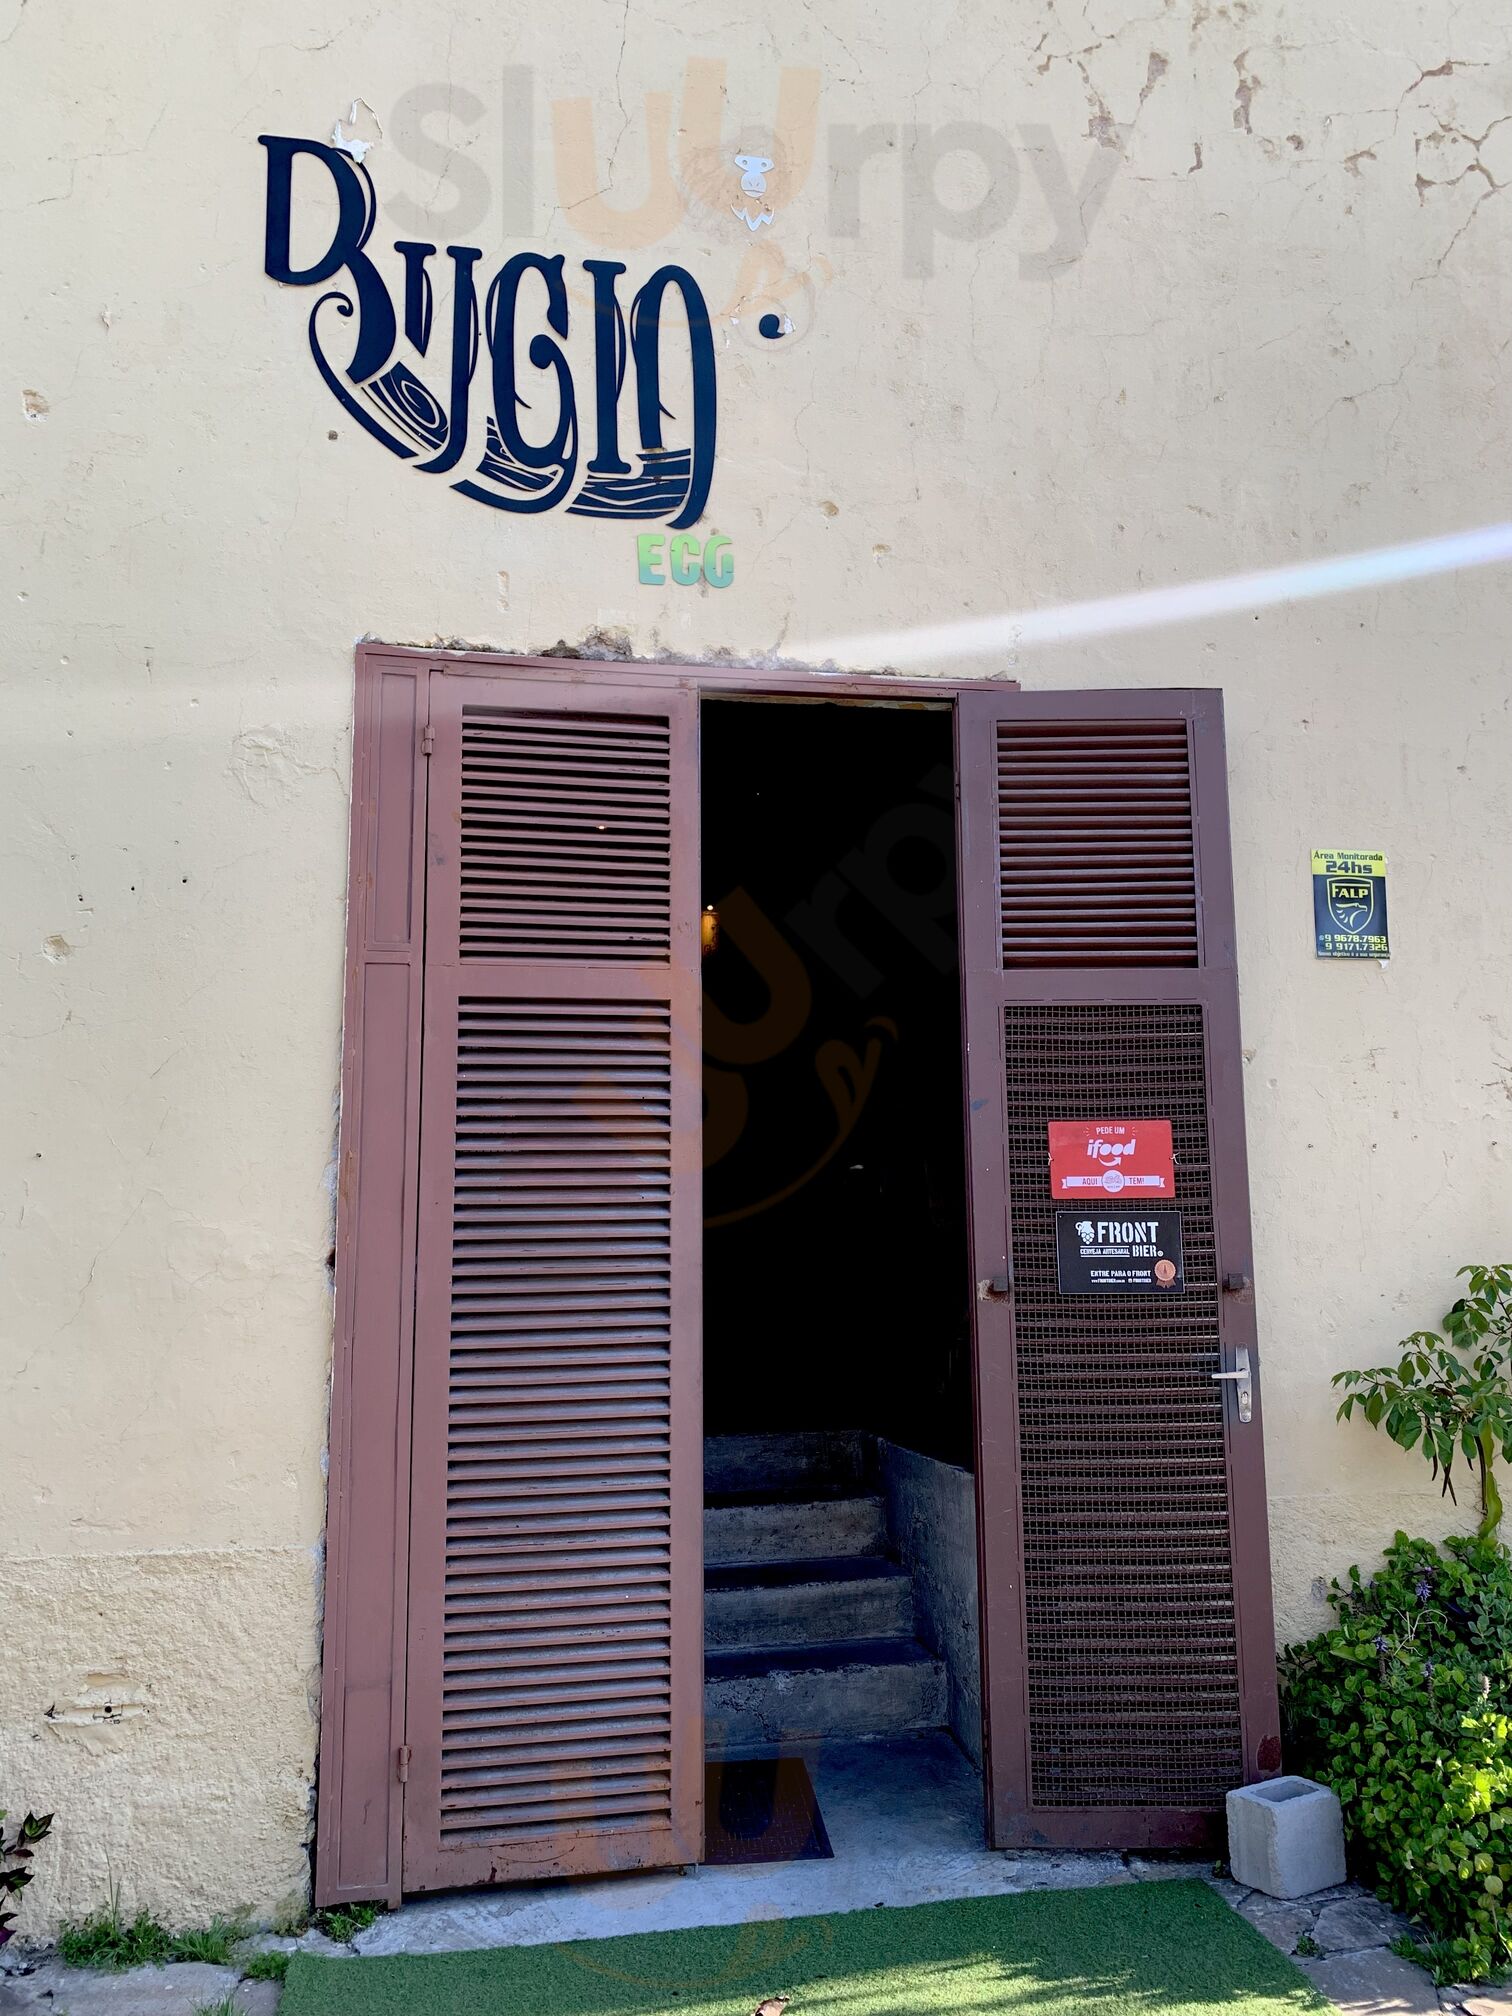 Bugio Eco - Caxias Do Sul Restaurant - HappyCow